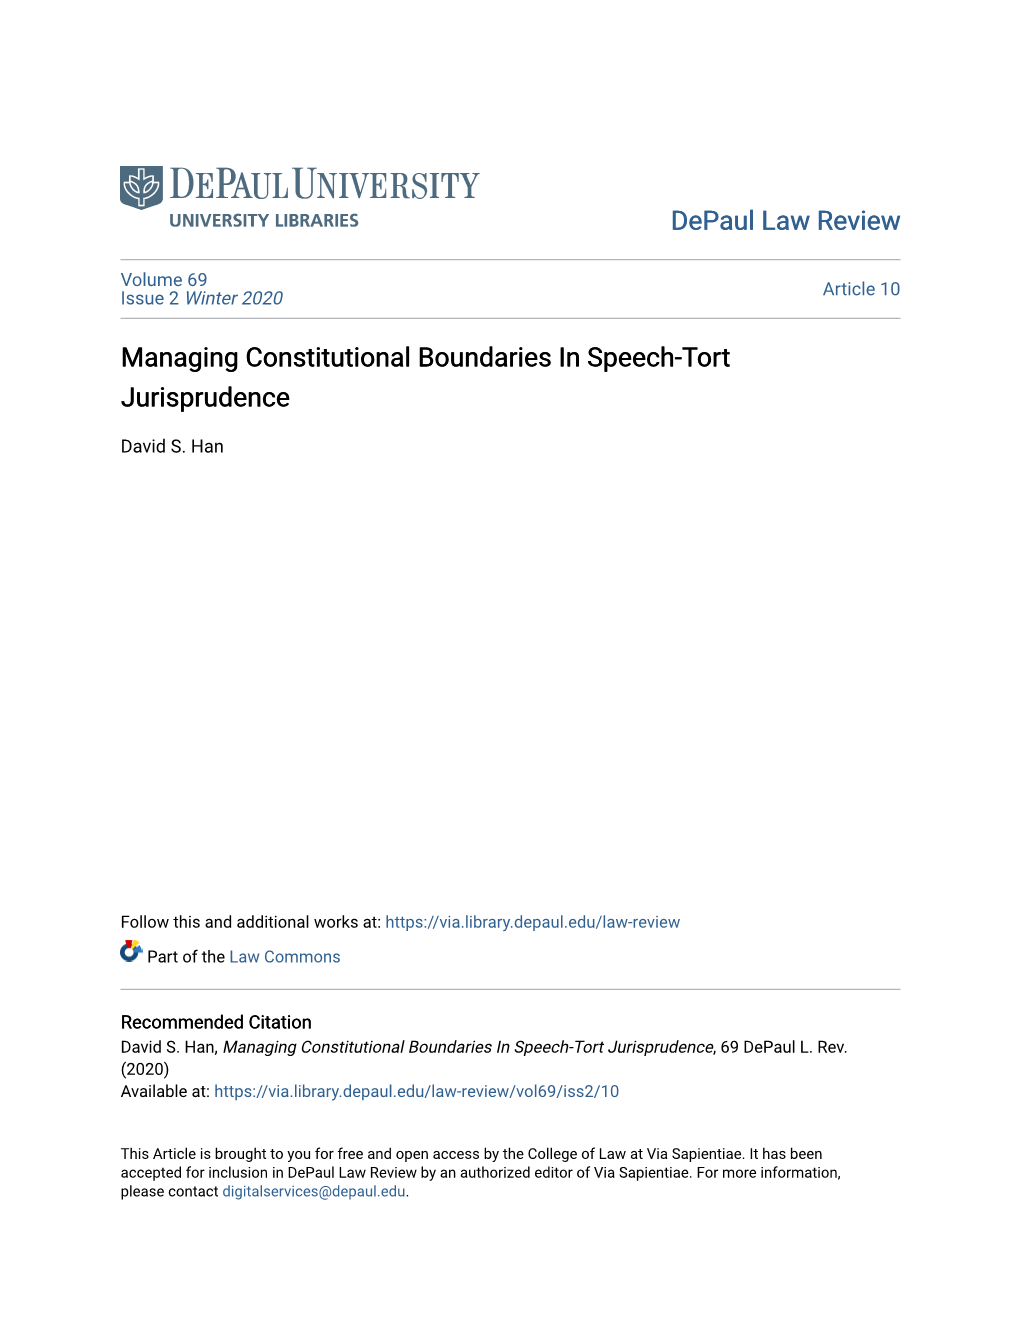 Managing Constitutional Boundaries in Speech-Tort Jurisprudence